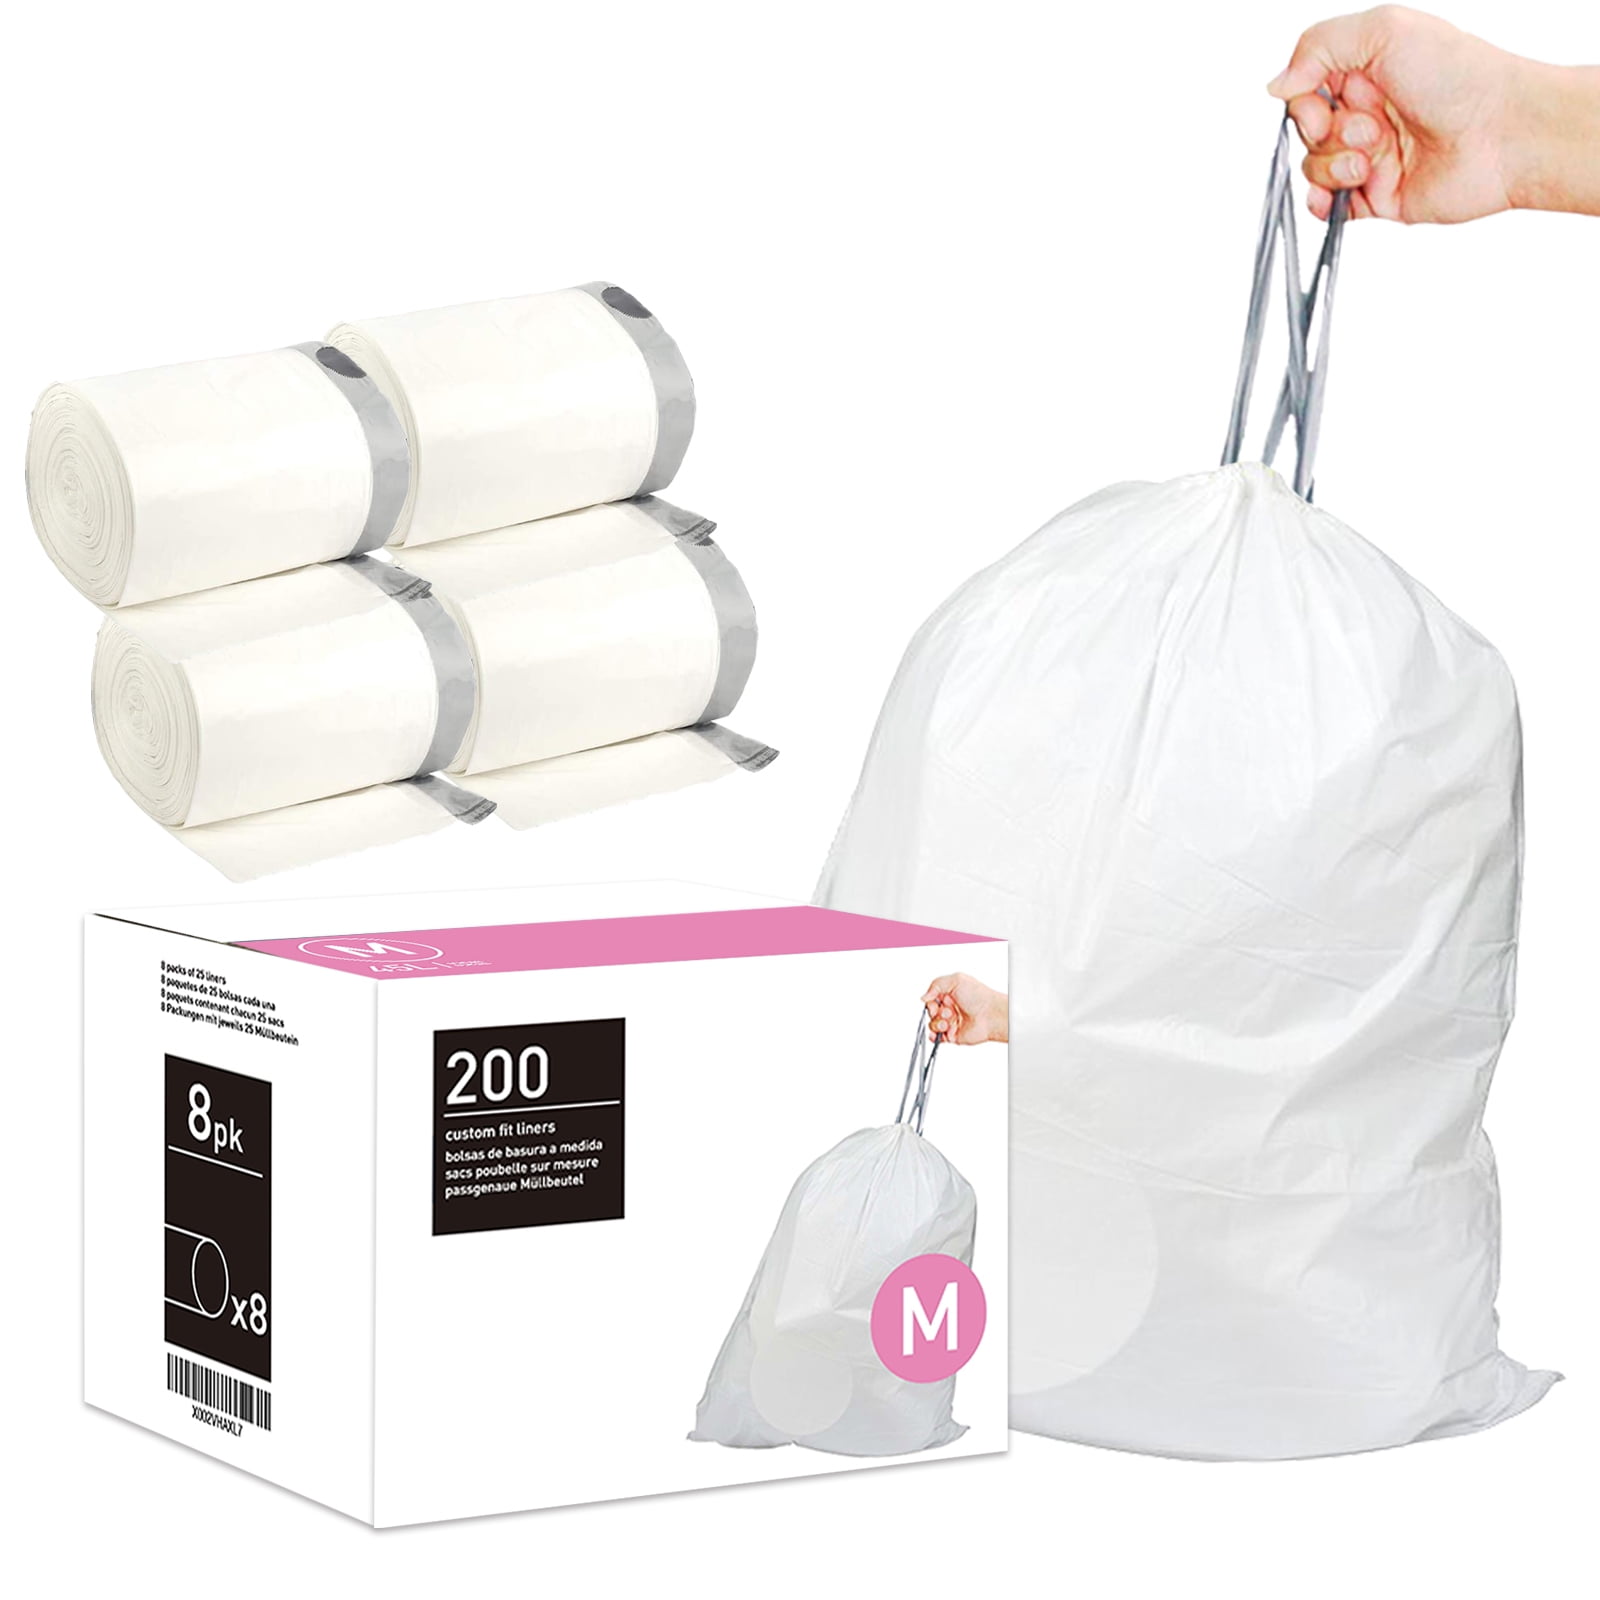 90 ct. Simplehuman Size B Custom Fit Drawstring Trash Bags Liners